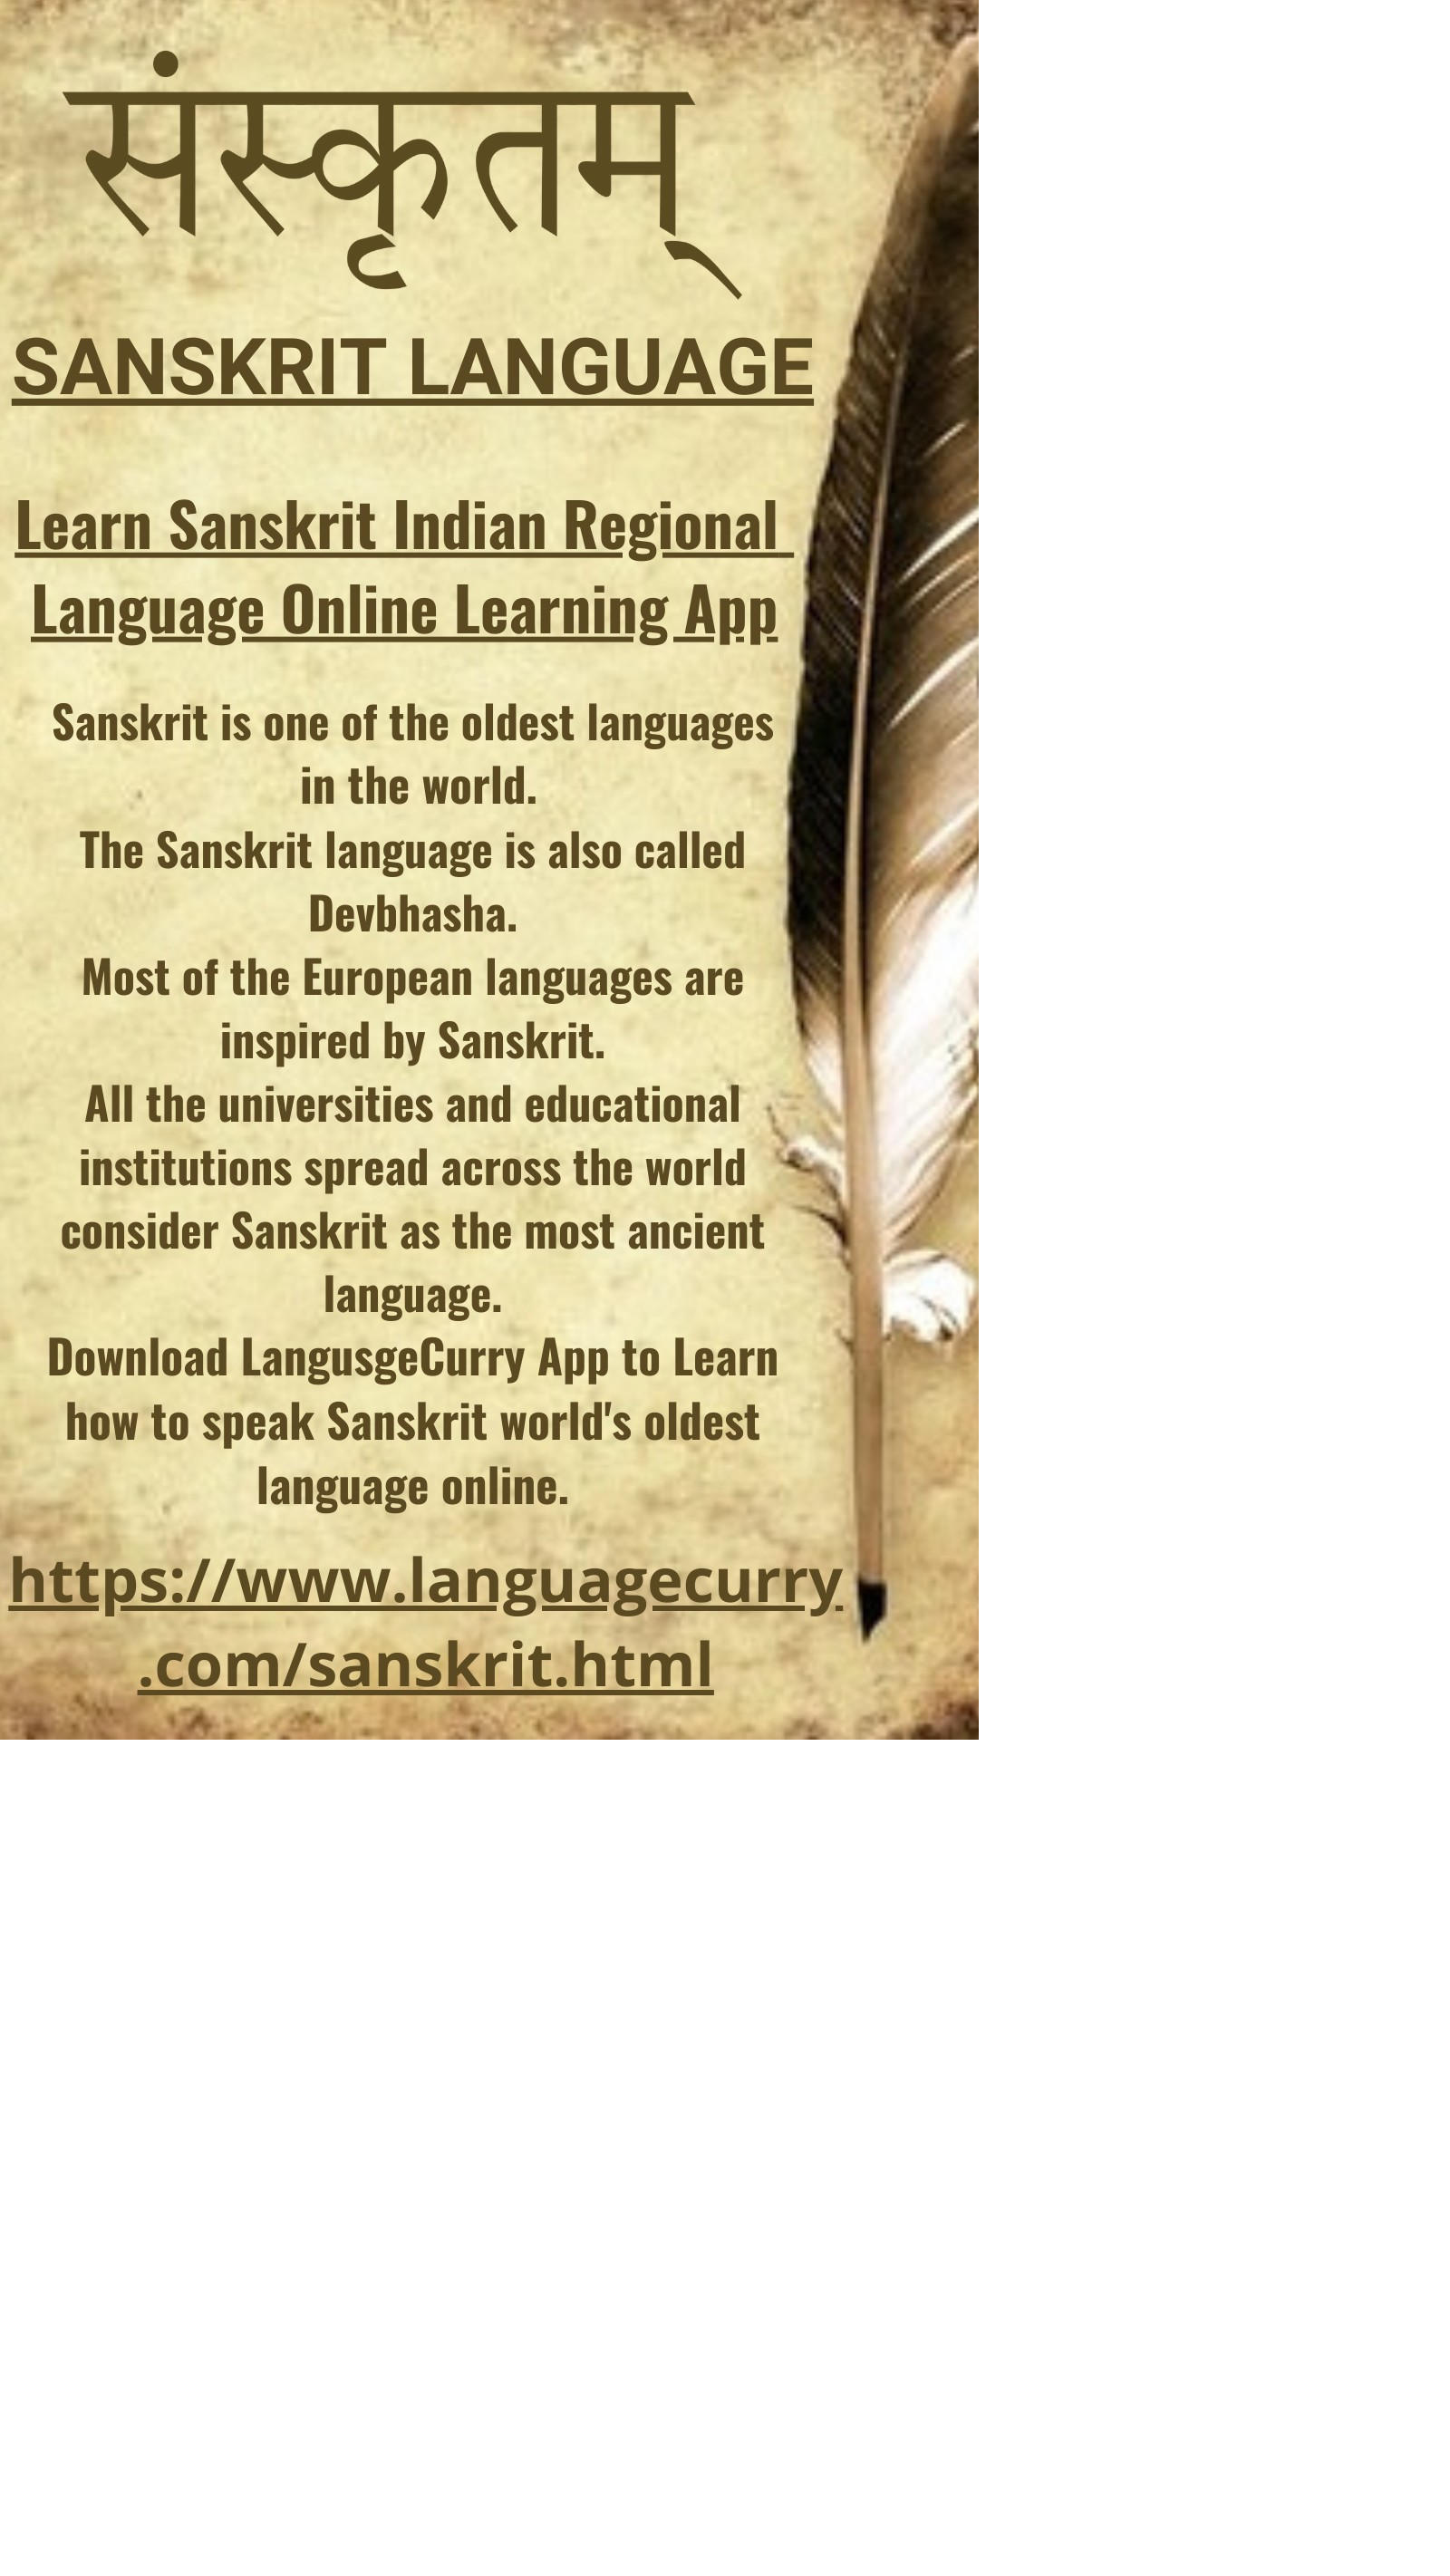  Learn Sanskrit Indian Regional Language Online Learning App